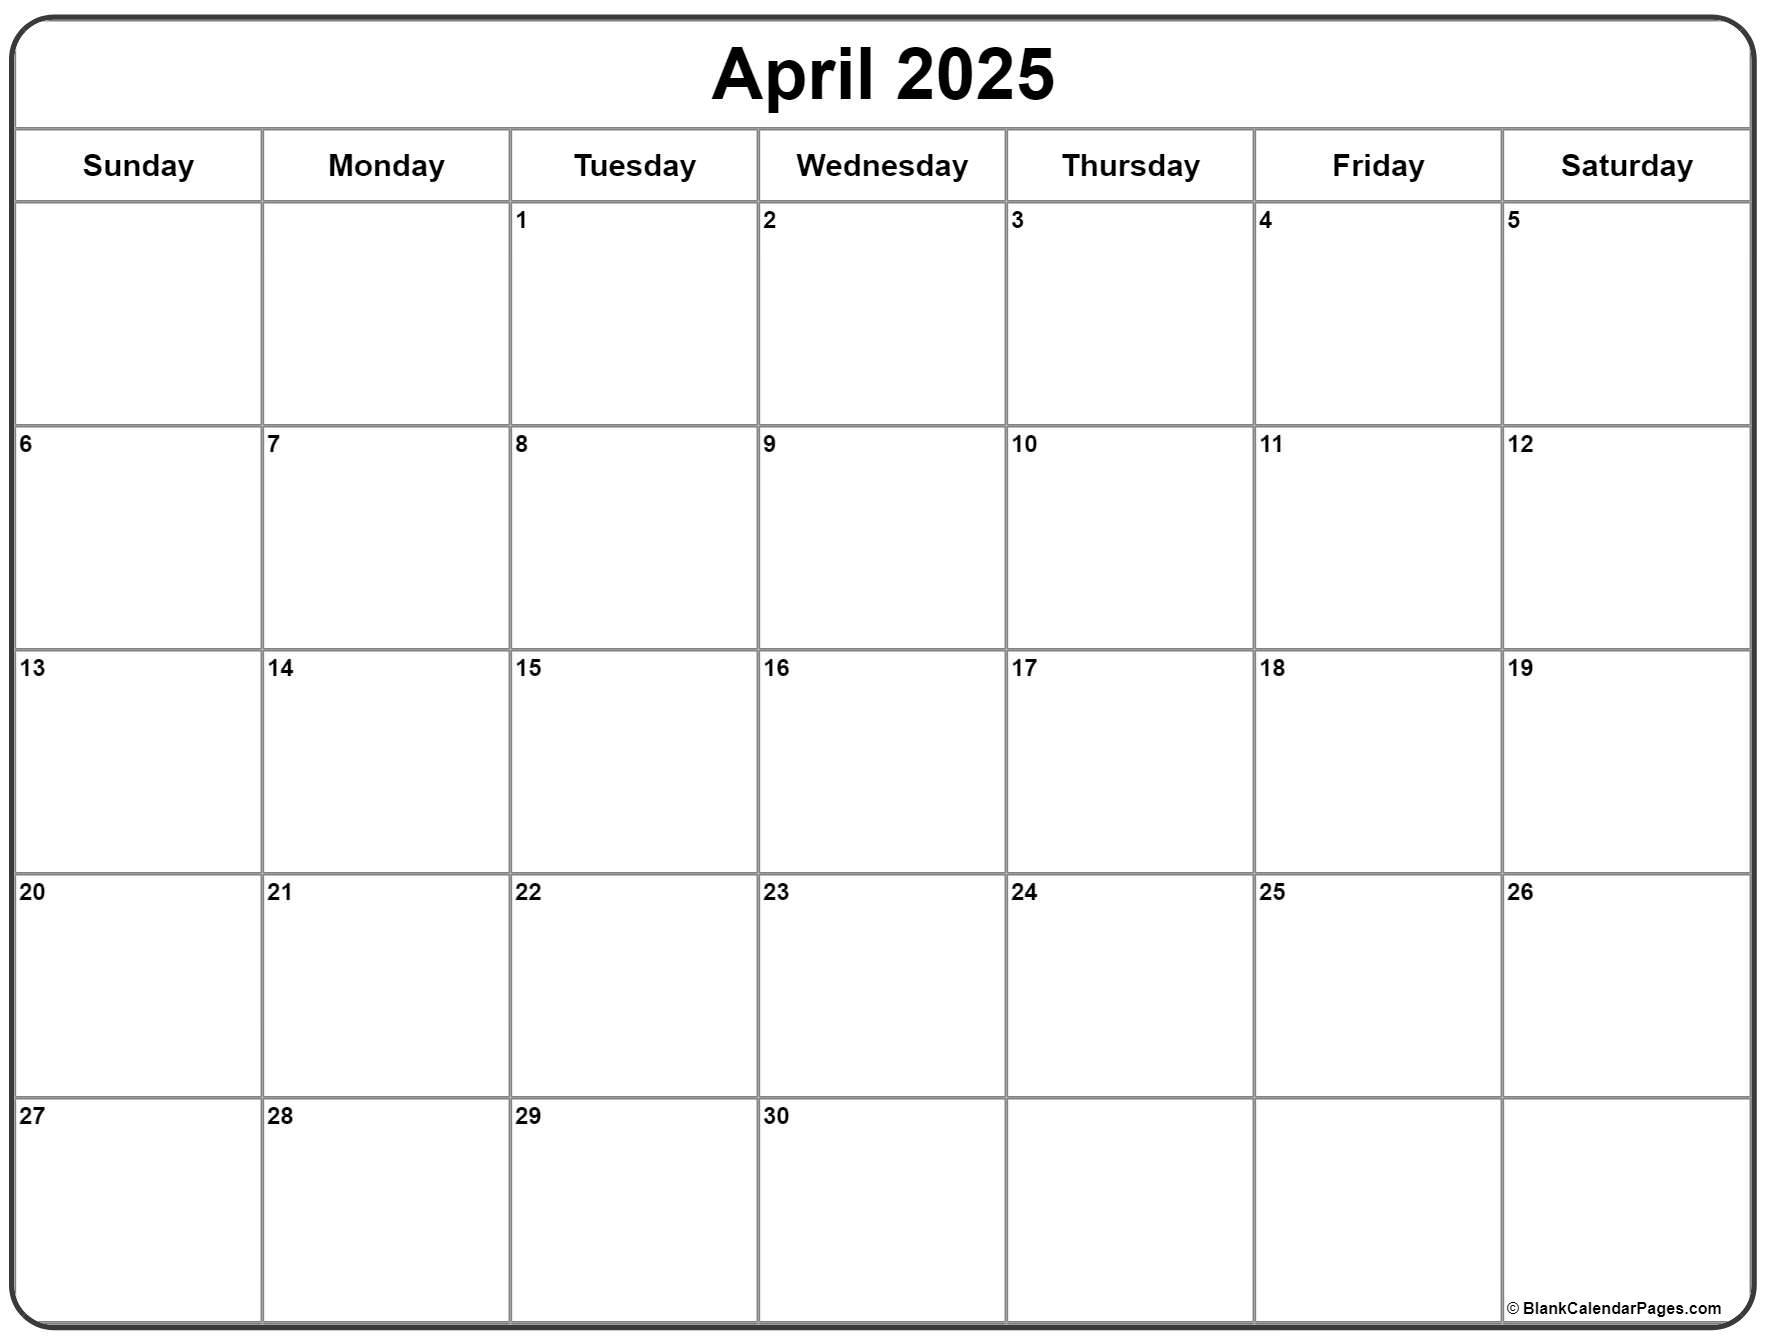 April 2025 calendar free printable calendar